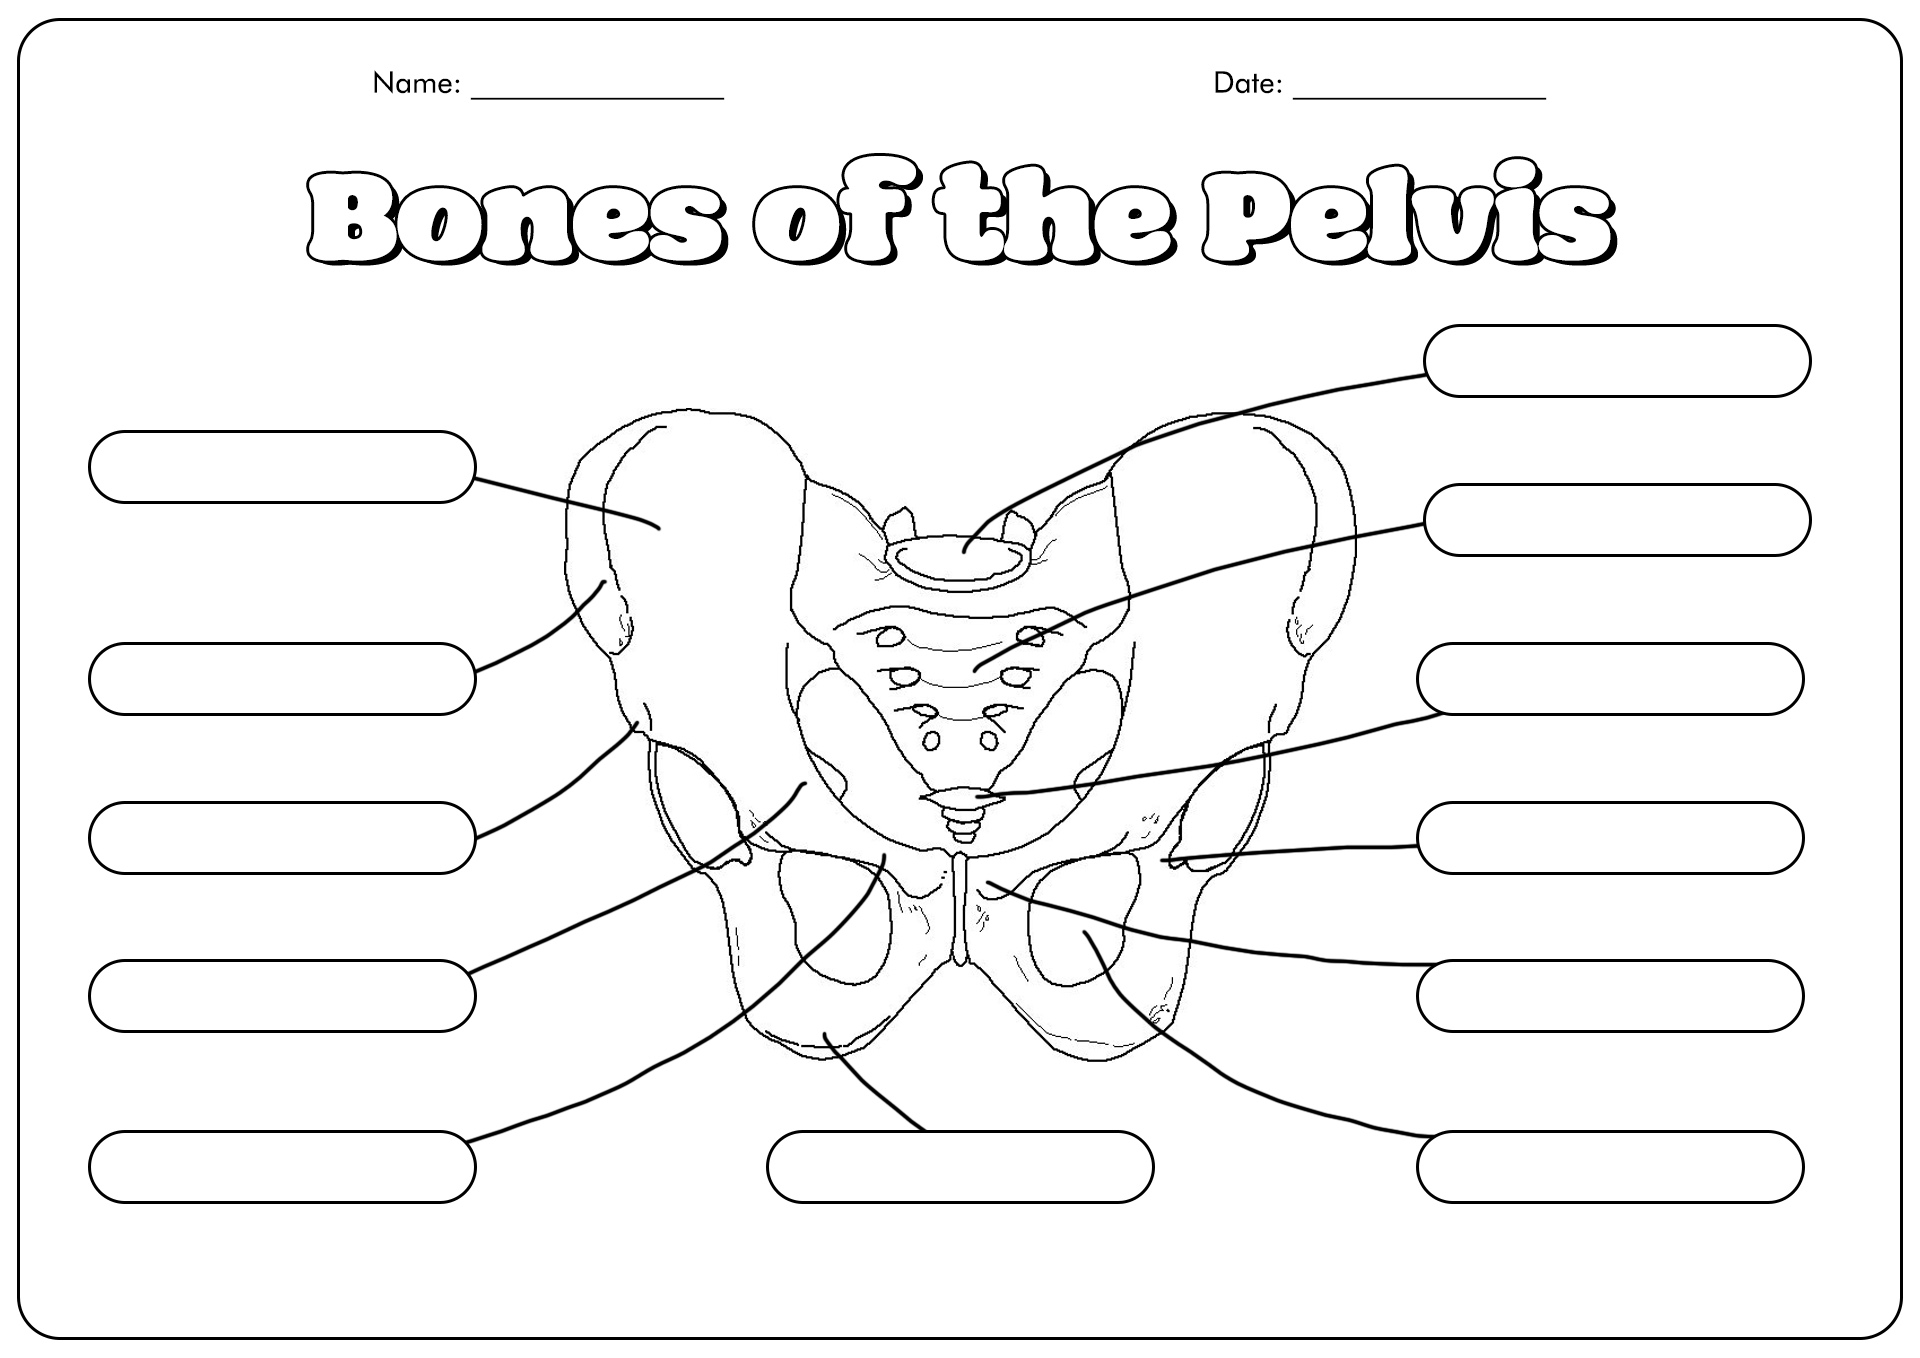 Unlabeled Pelvis Bone Anatomy Image